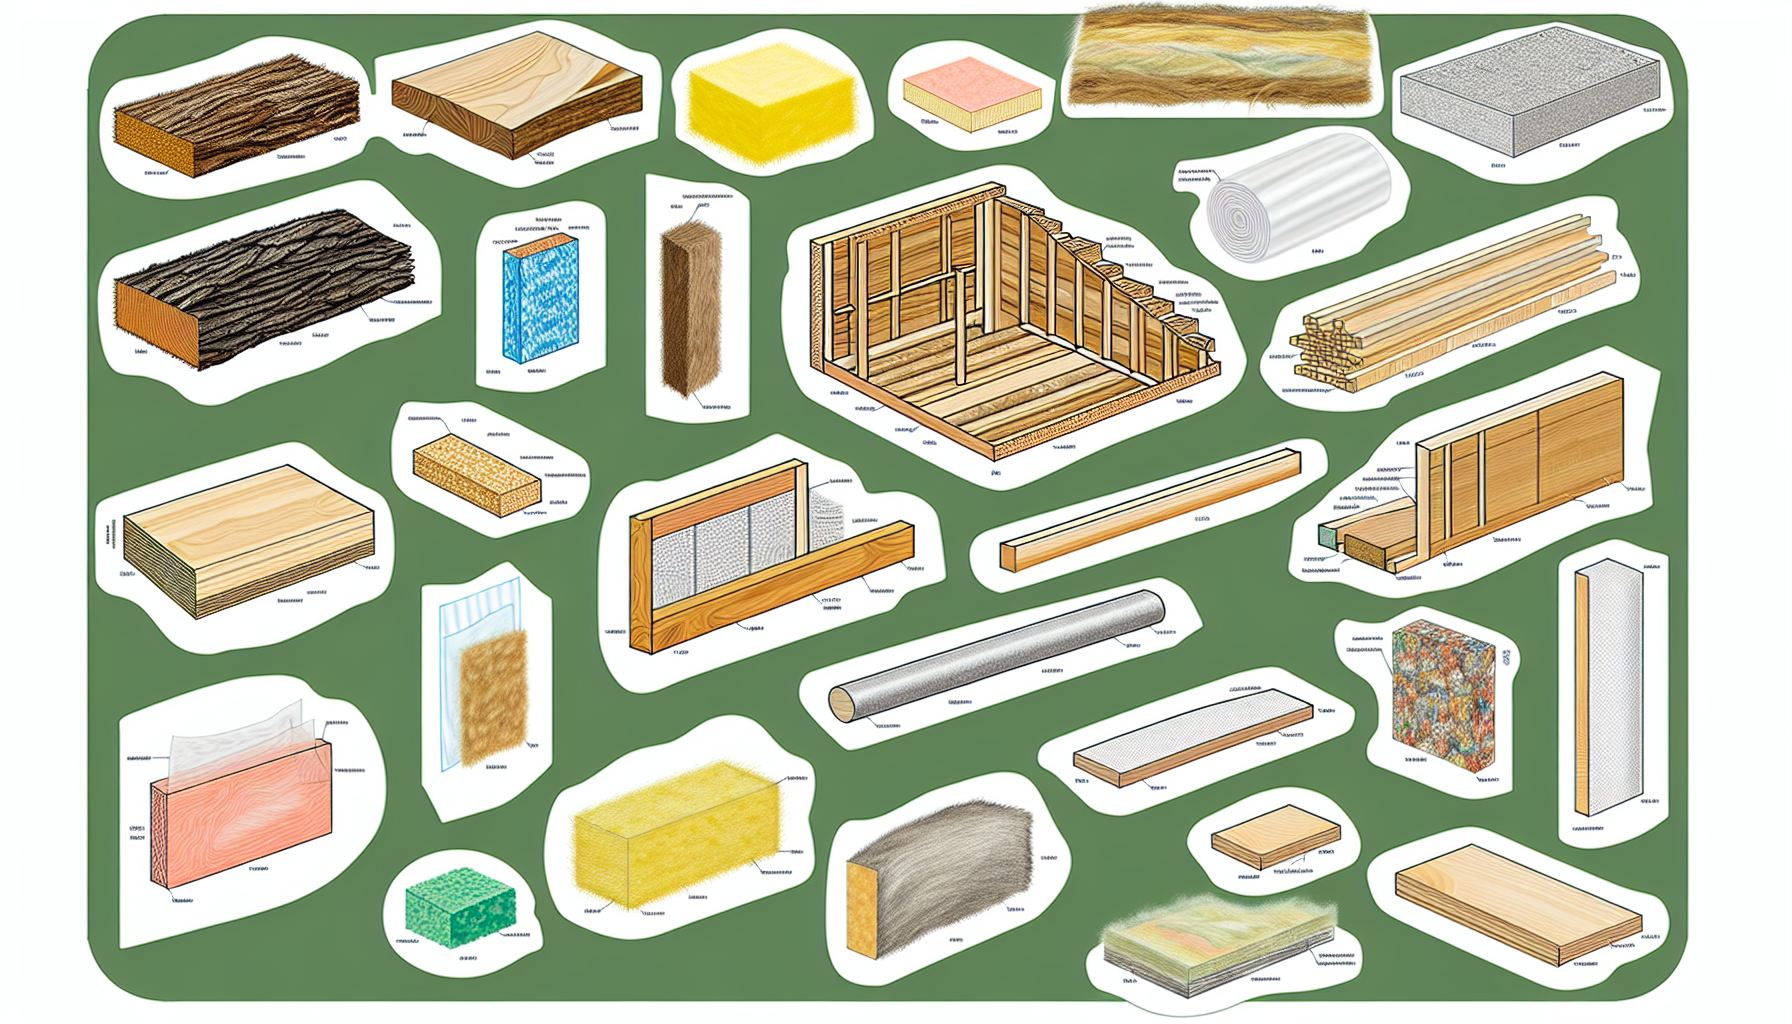 Timber frame construction materials